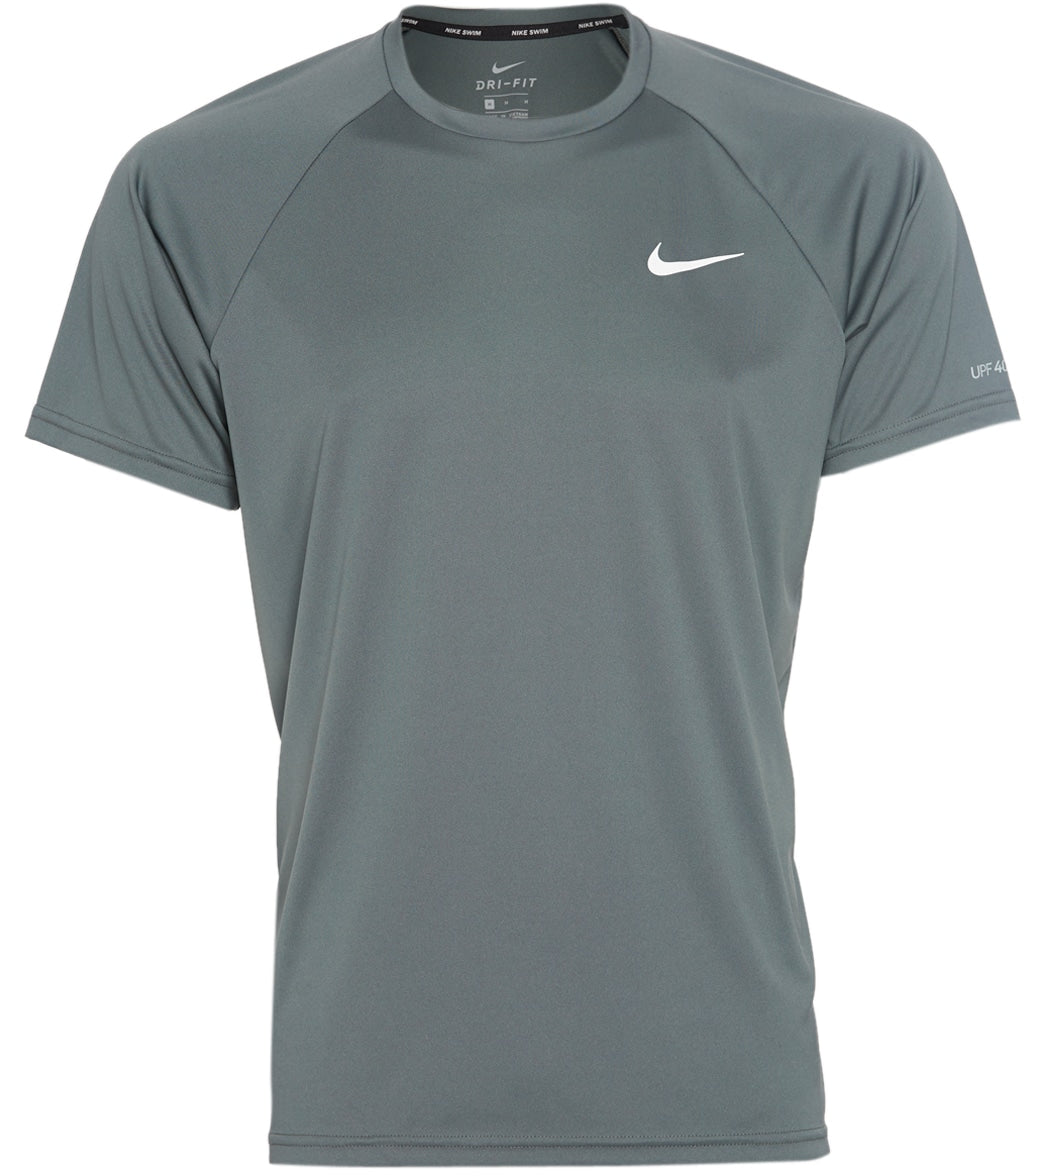 Nike Mens Essential Short Sleeve Hydroguard Swim Shirt